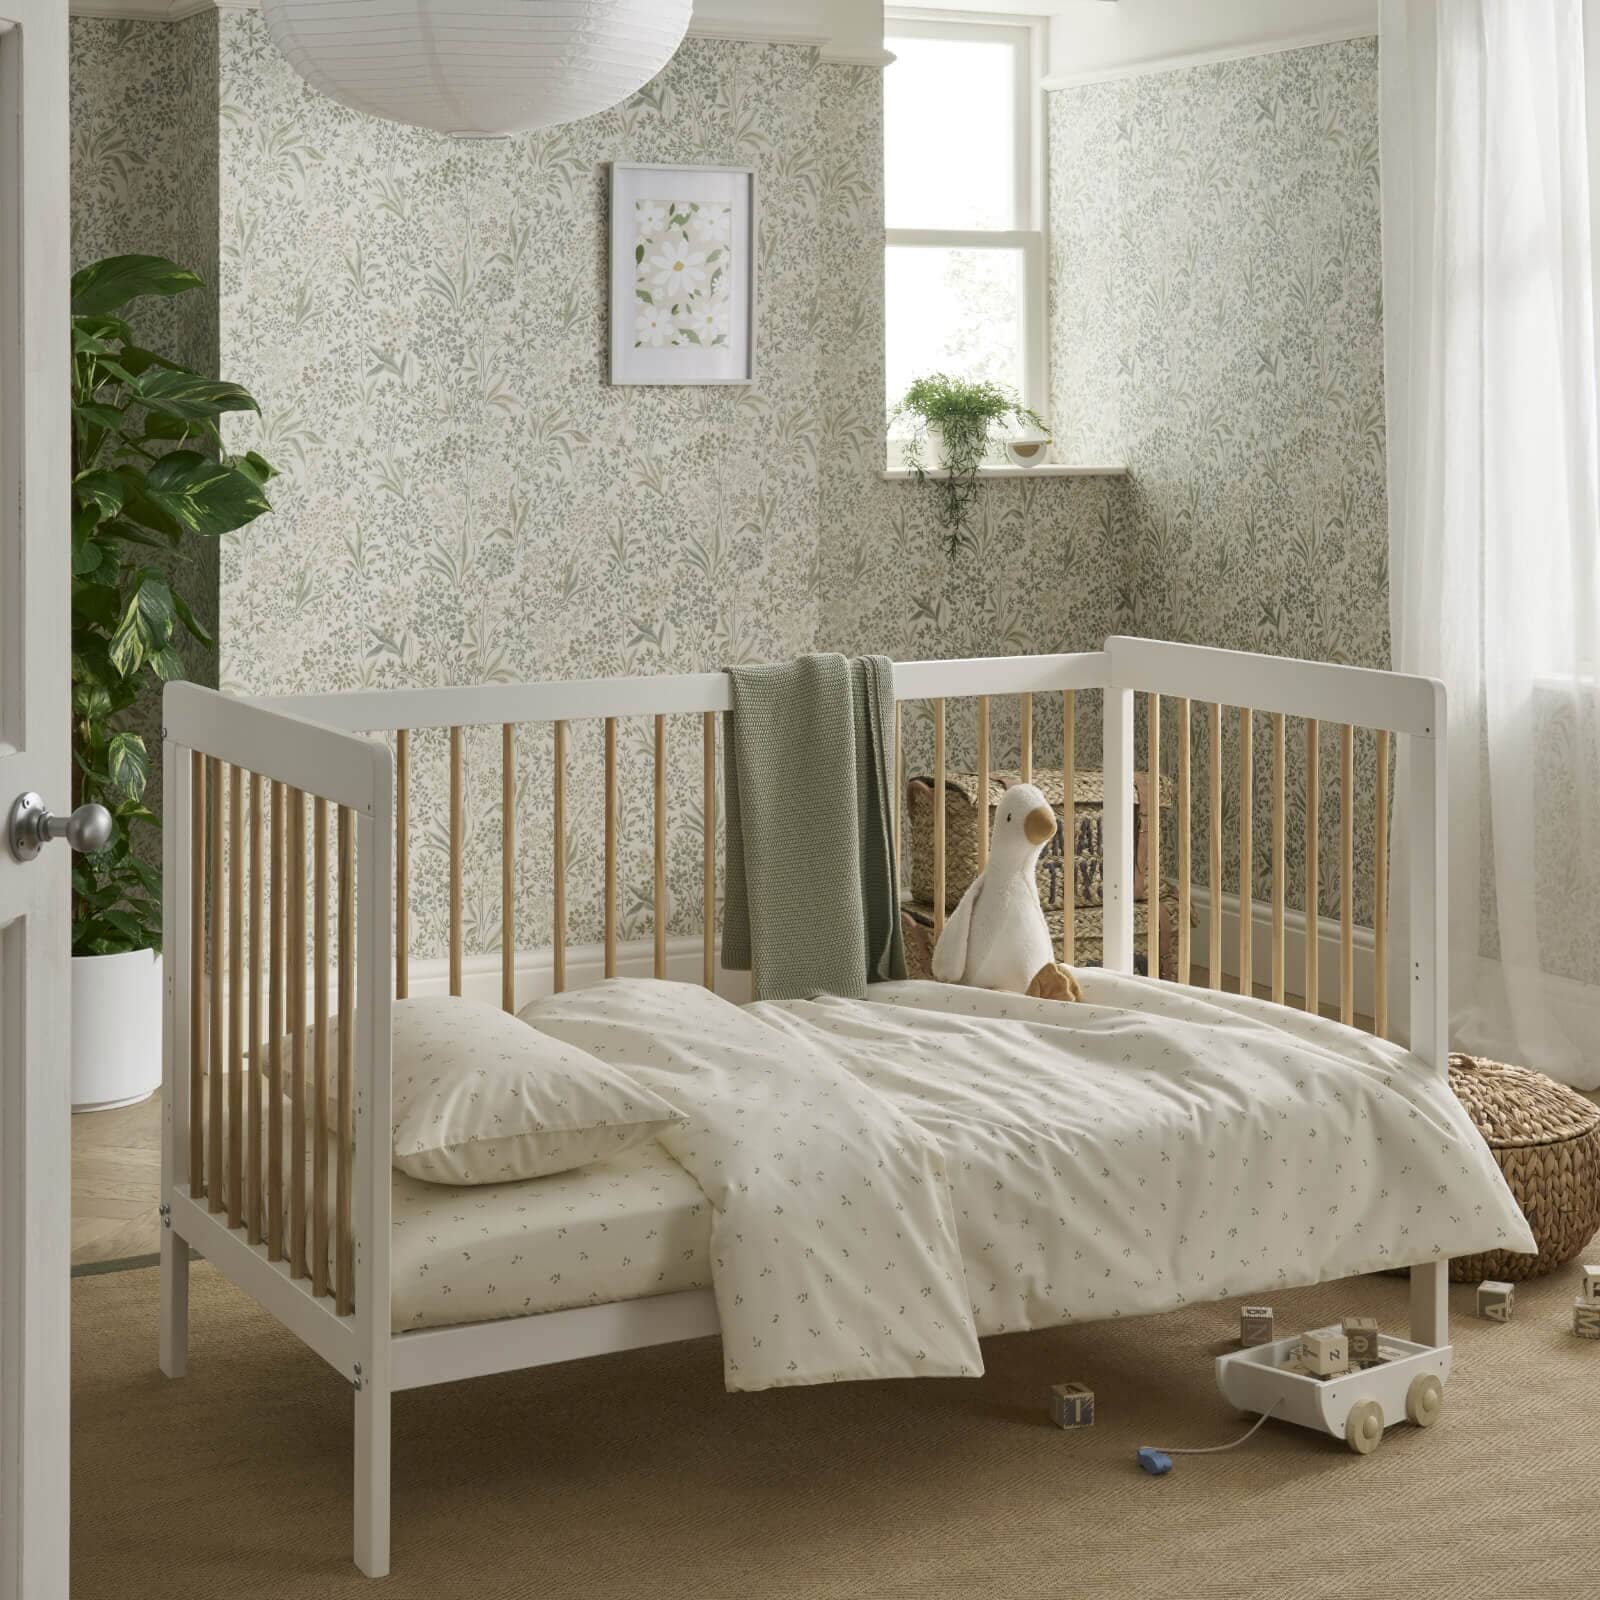 Nola 3 Piece Nursery Furniture Set - White & Natural Furniture Sets CuddleCo 